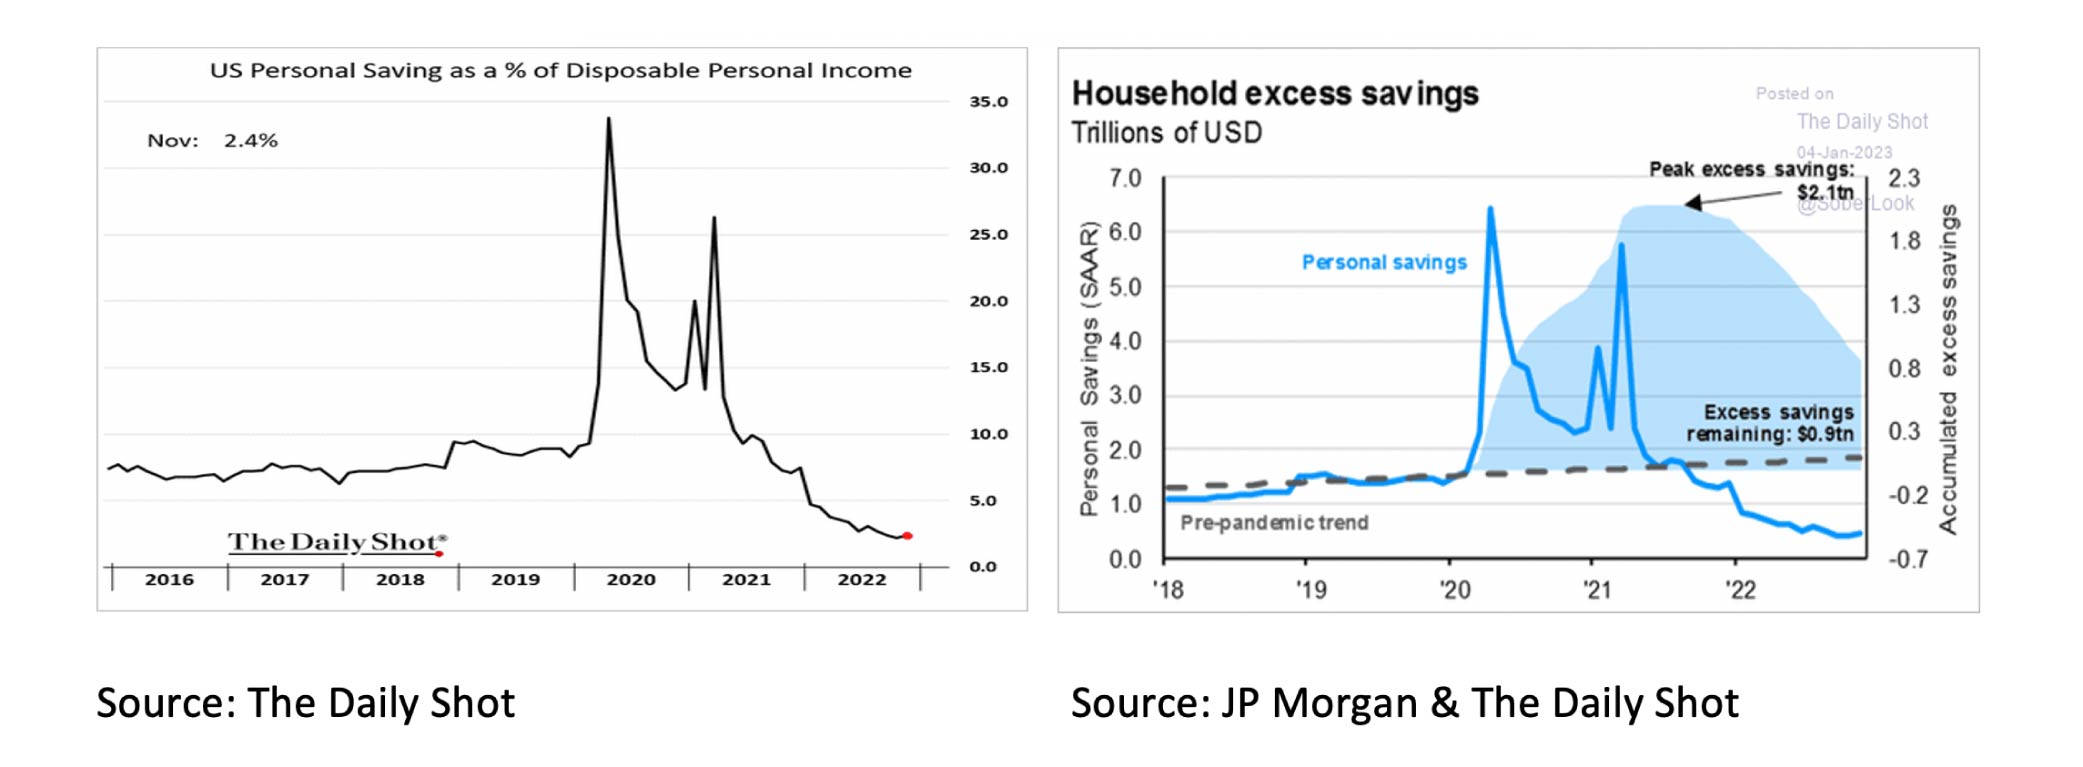 Household excess savings